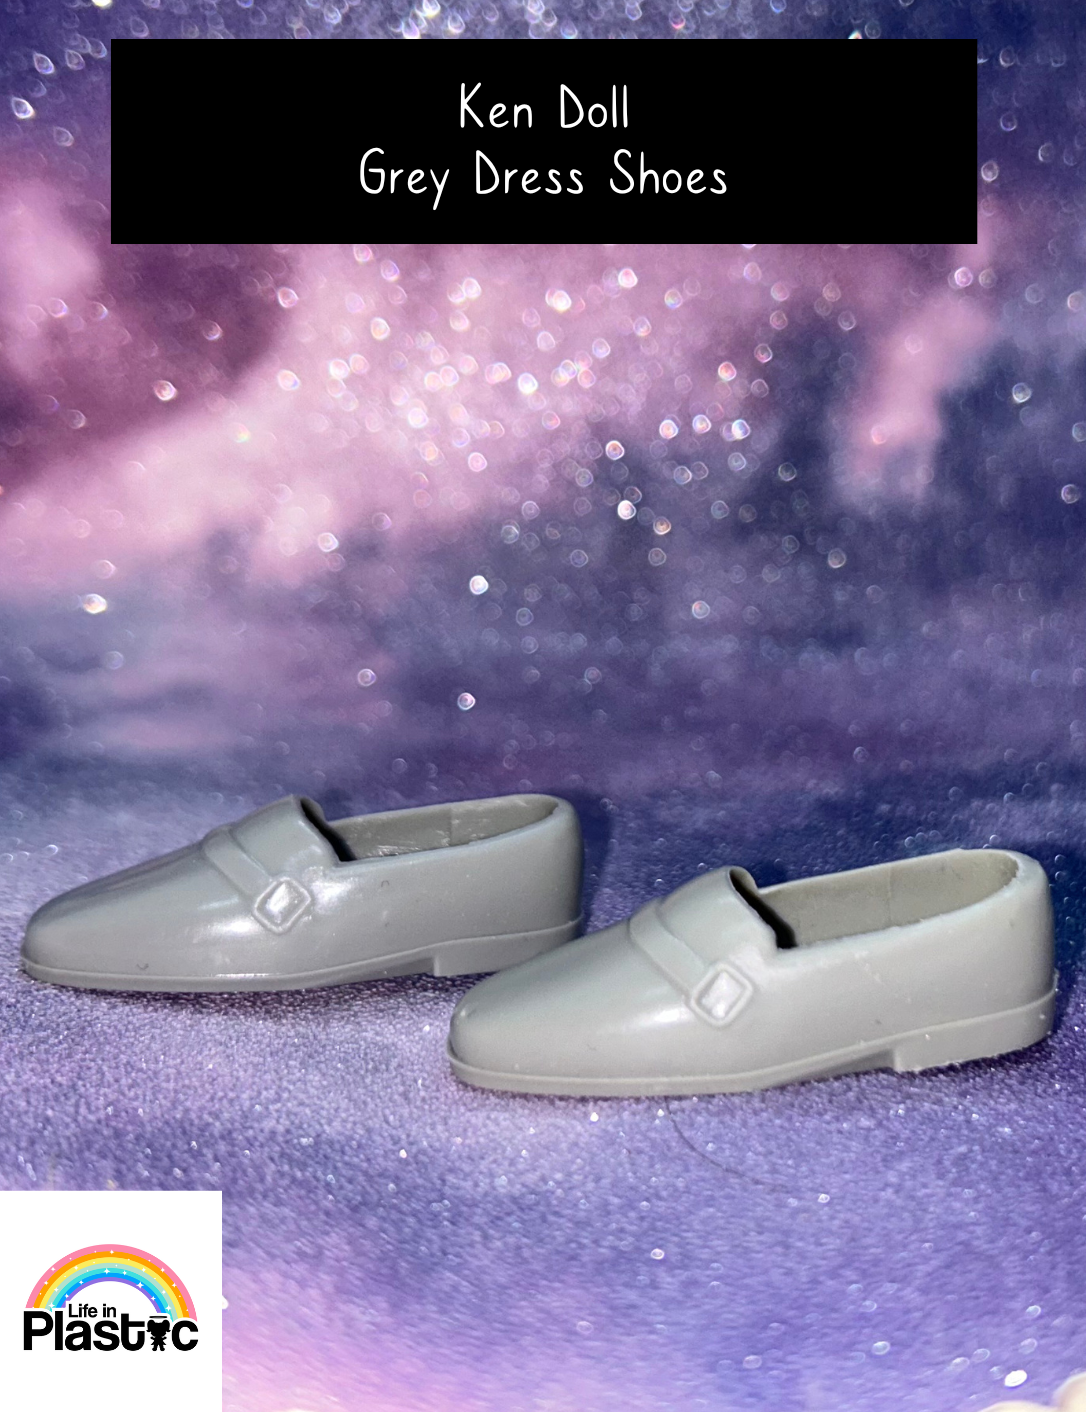 Ken Doll Grey Dress Shoes